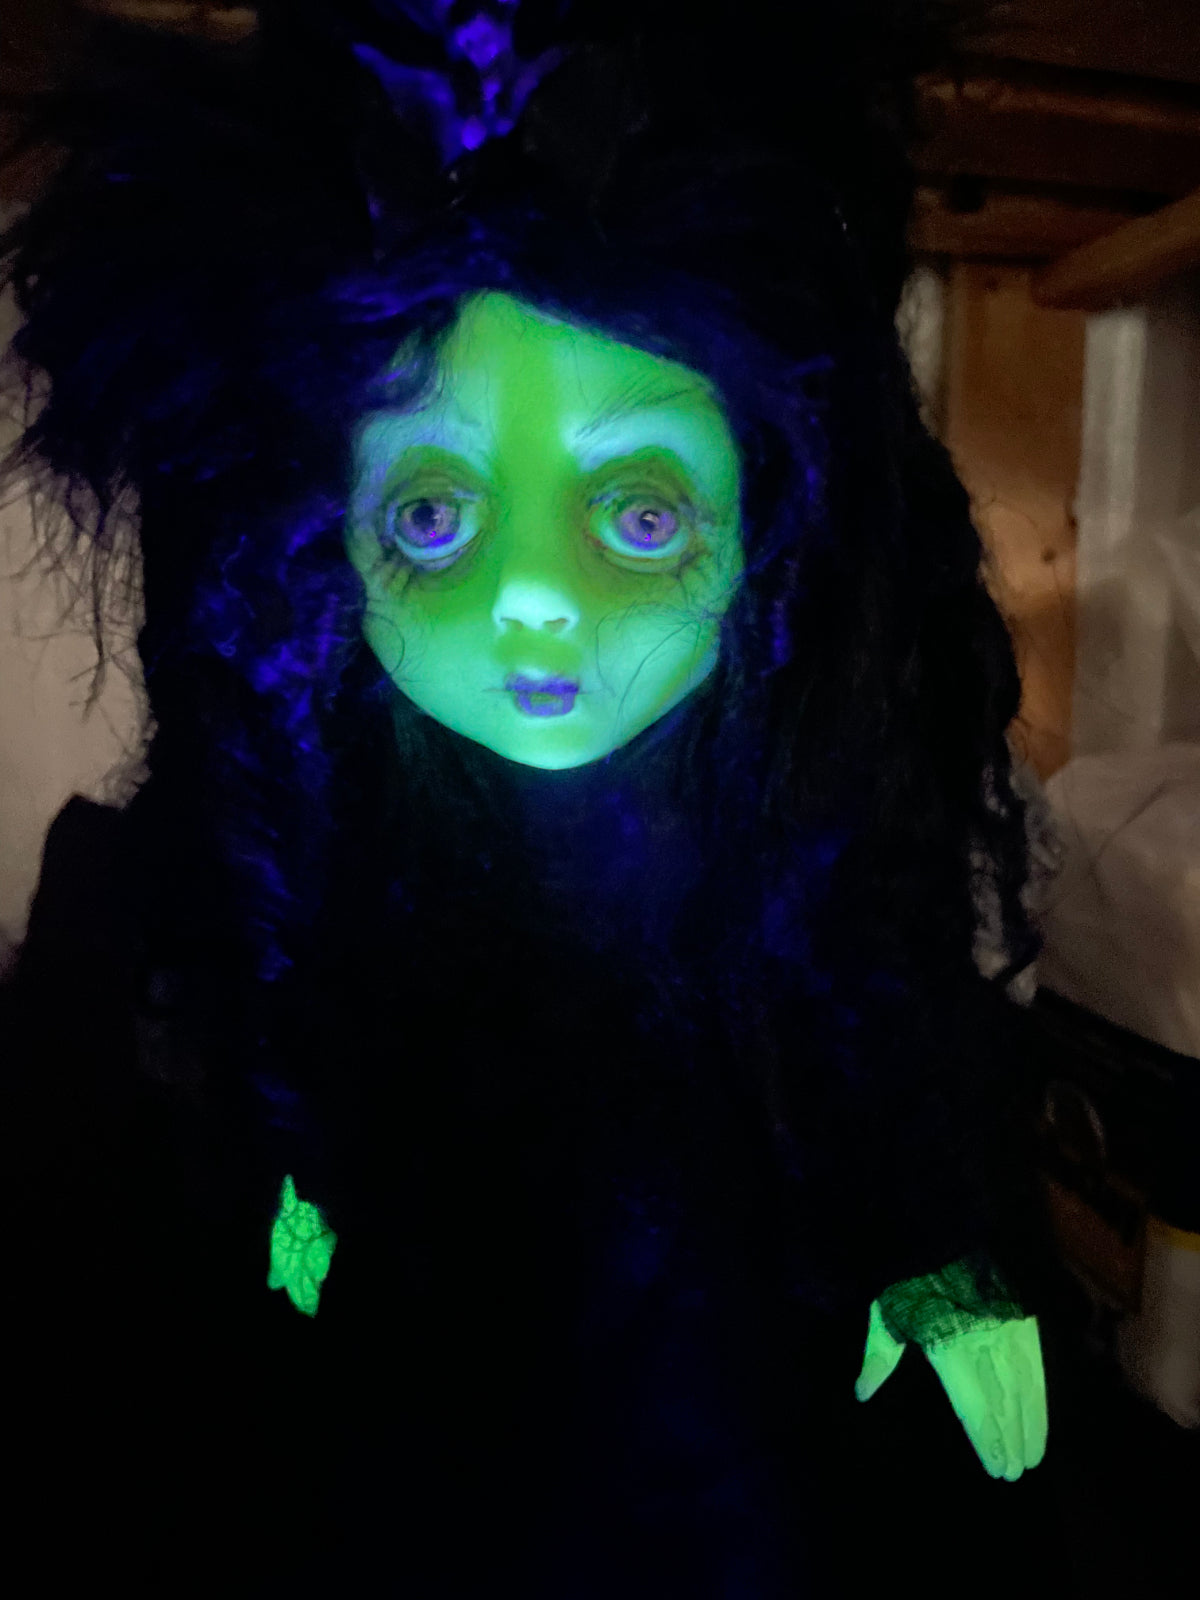 Minia the Vampire Glow in the dark Original LuLu Lancaster Art Doll